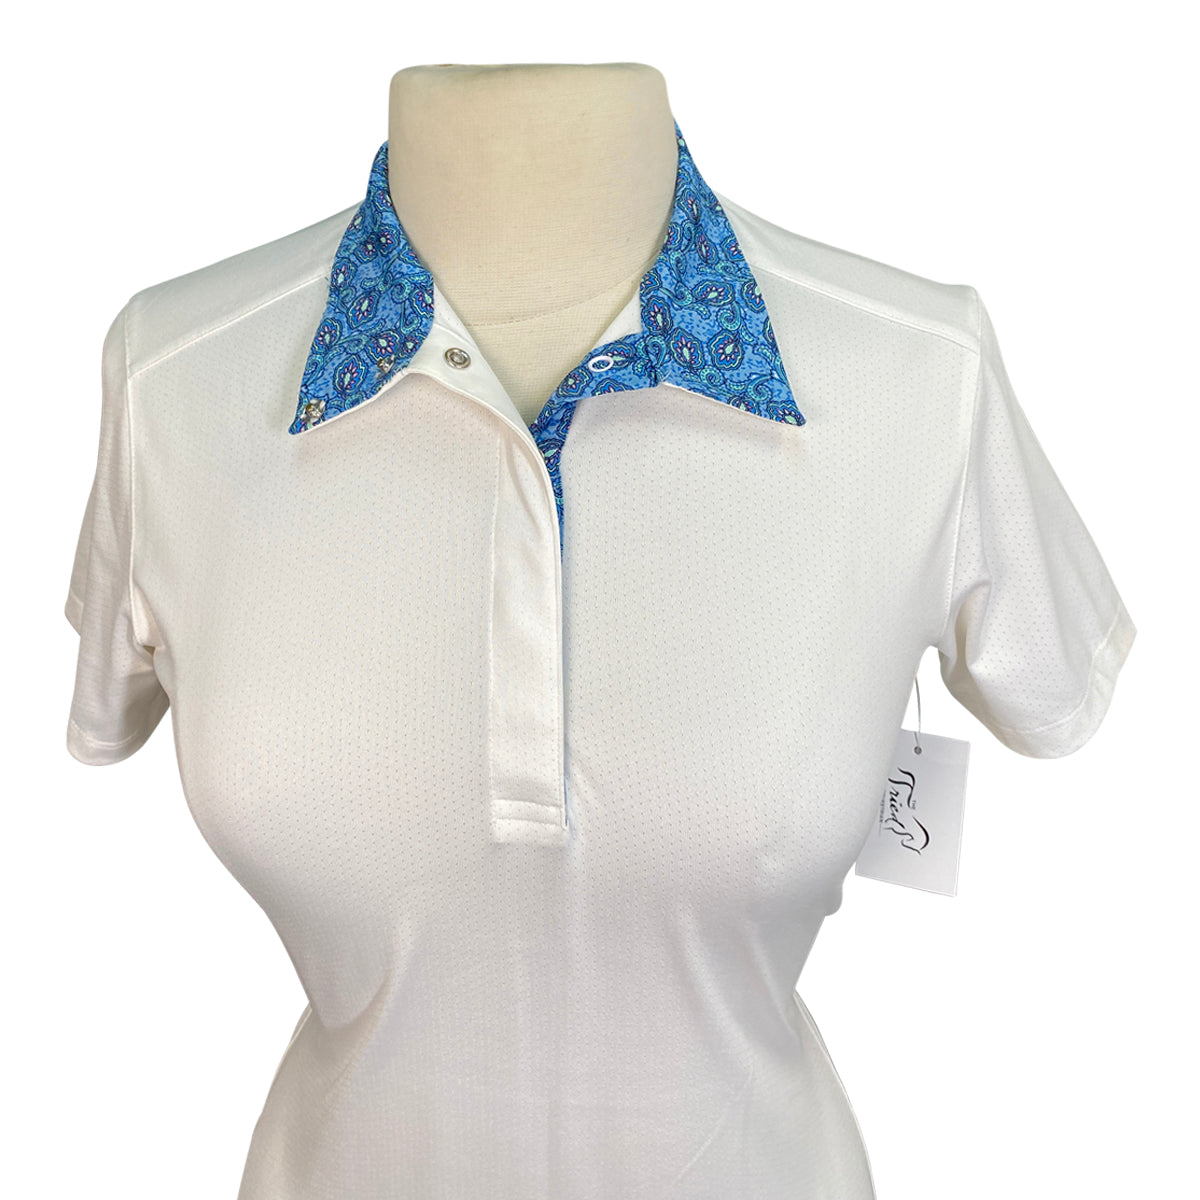 Essex Classics &#39;Talent Yarn&#39; Short Sleeve Show Shirt in White w/Blue Paisley